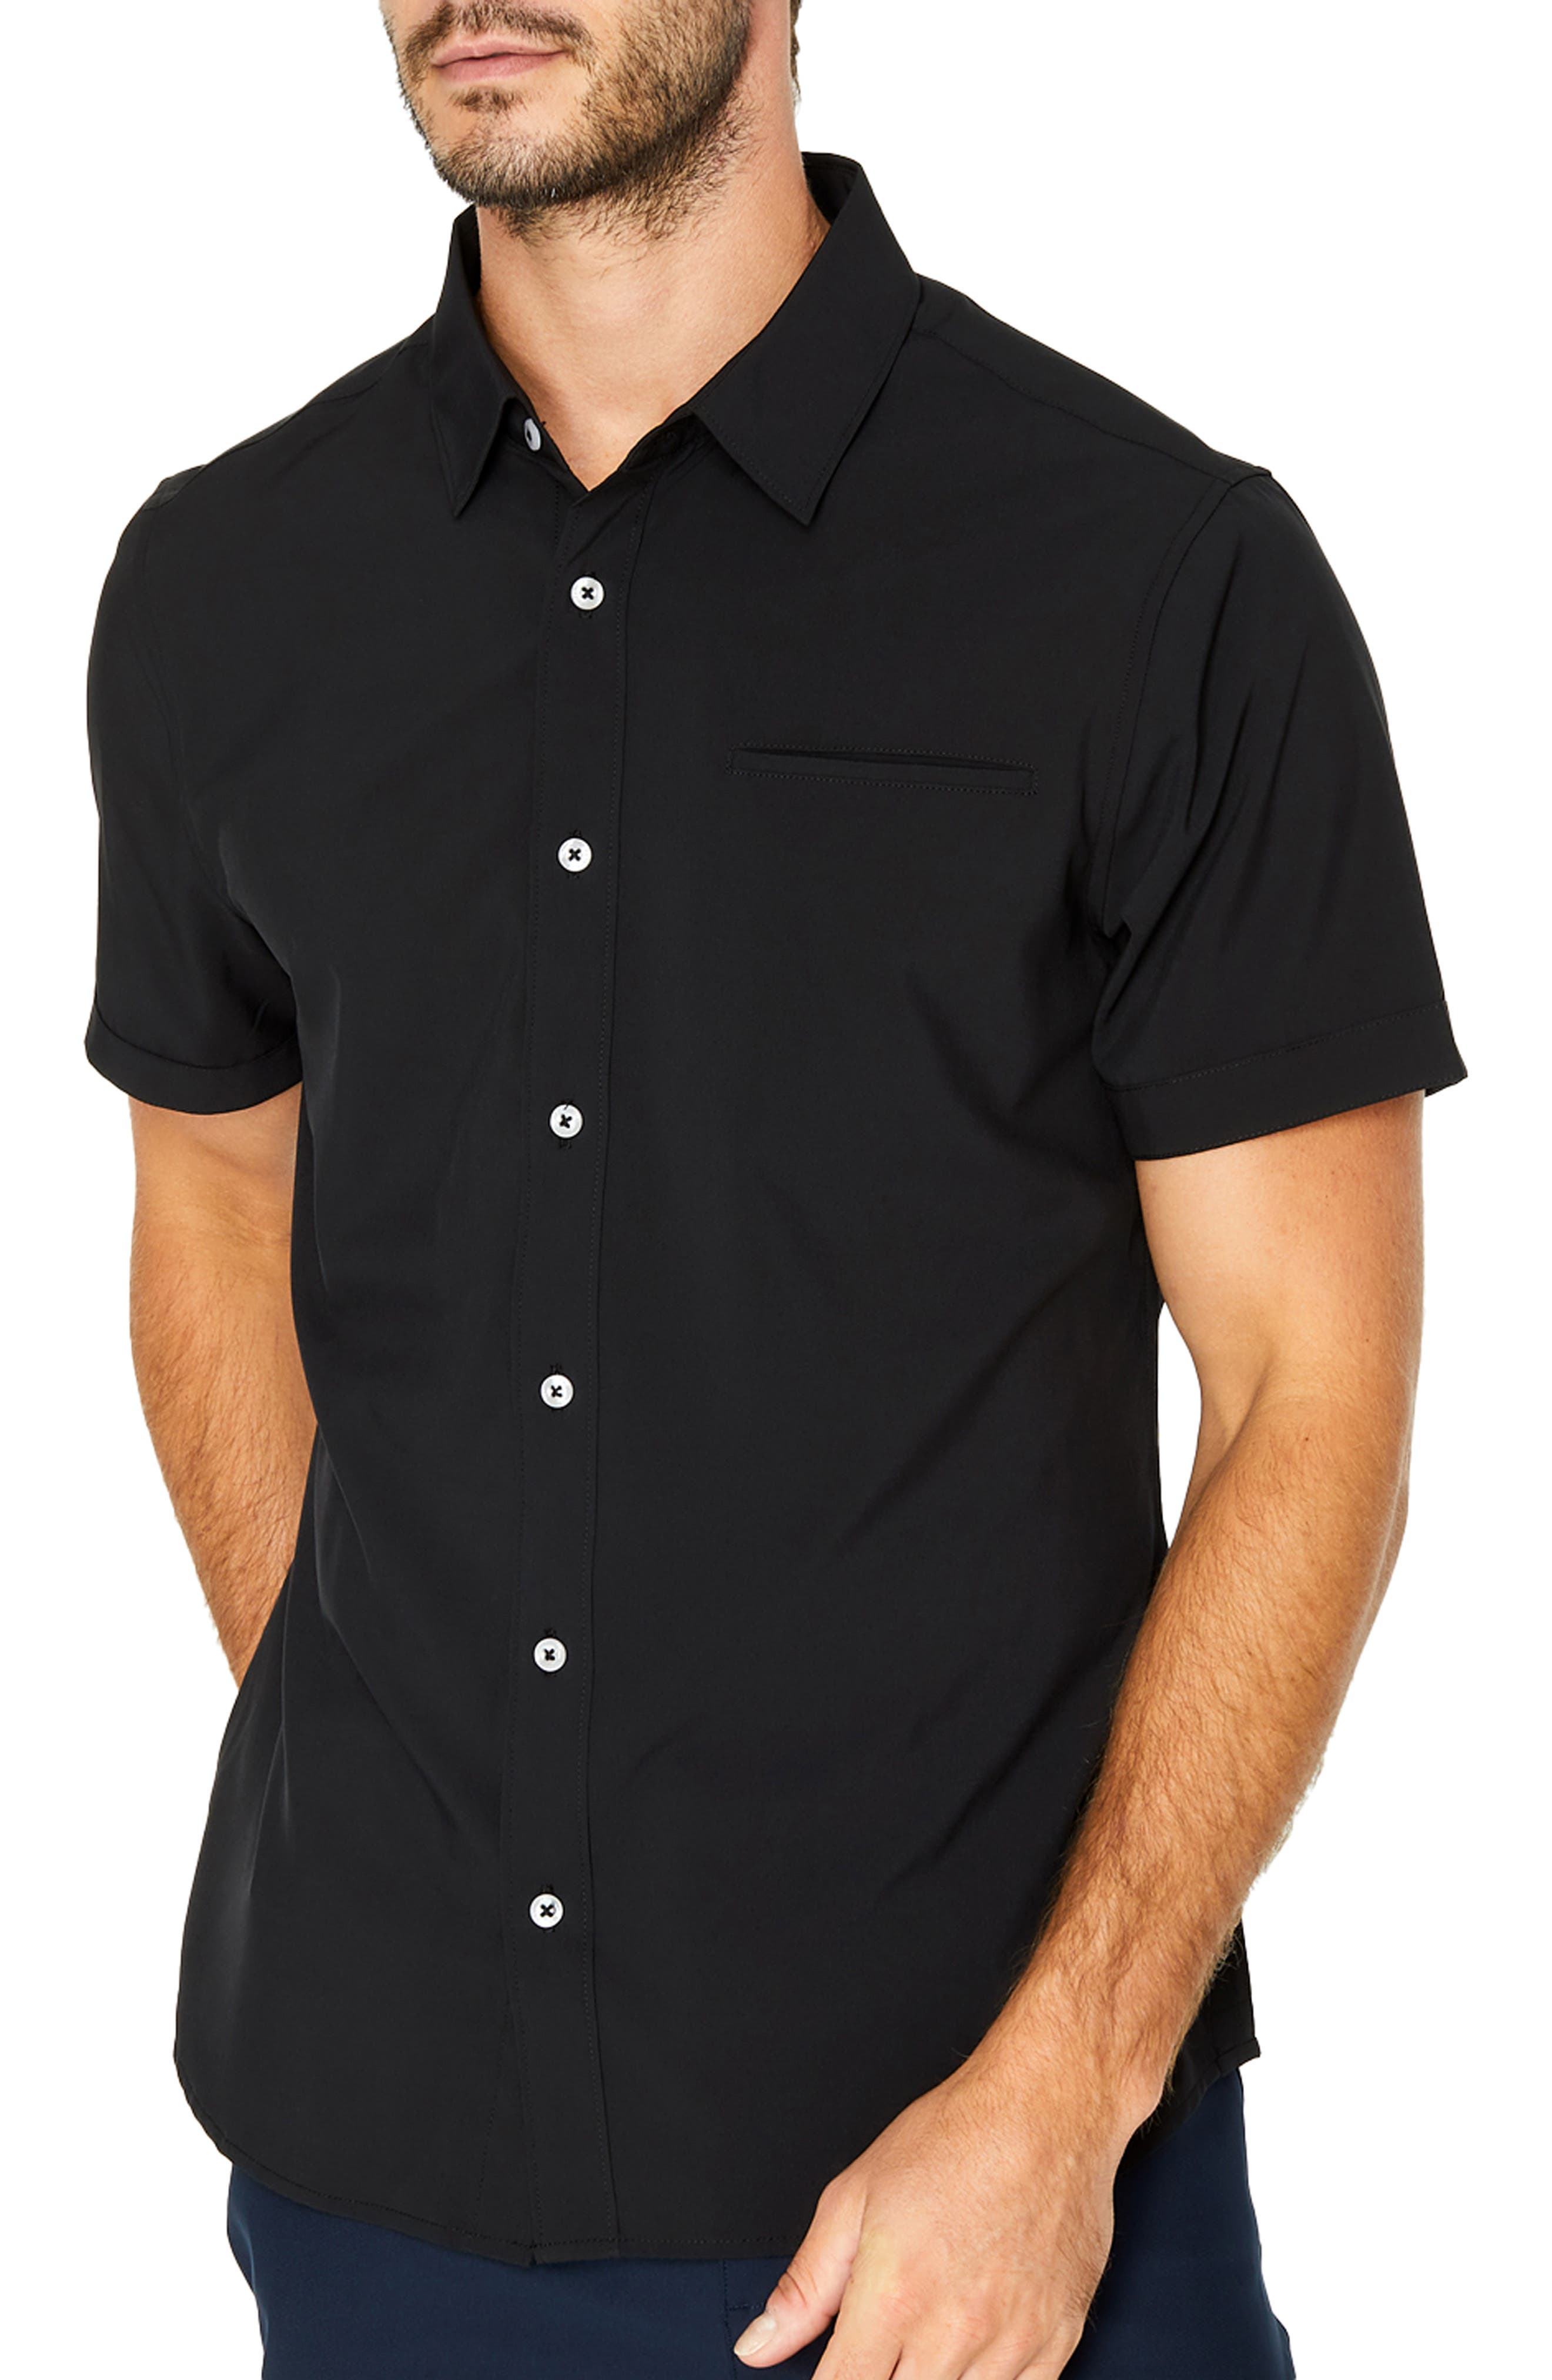 Men's Short Sleeve Summer Checks Collar Shirts Casual Slim Fit Shirt Top Blouse